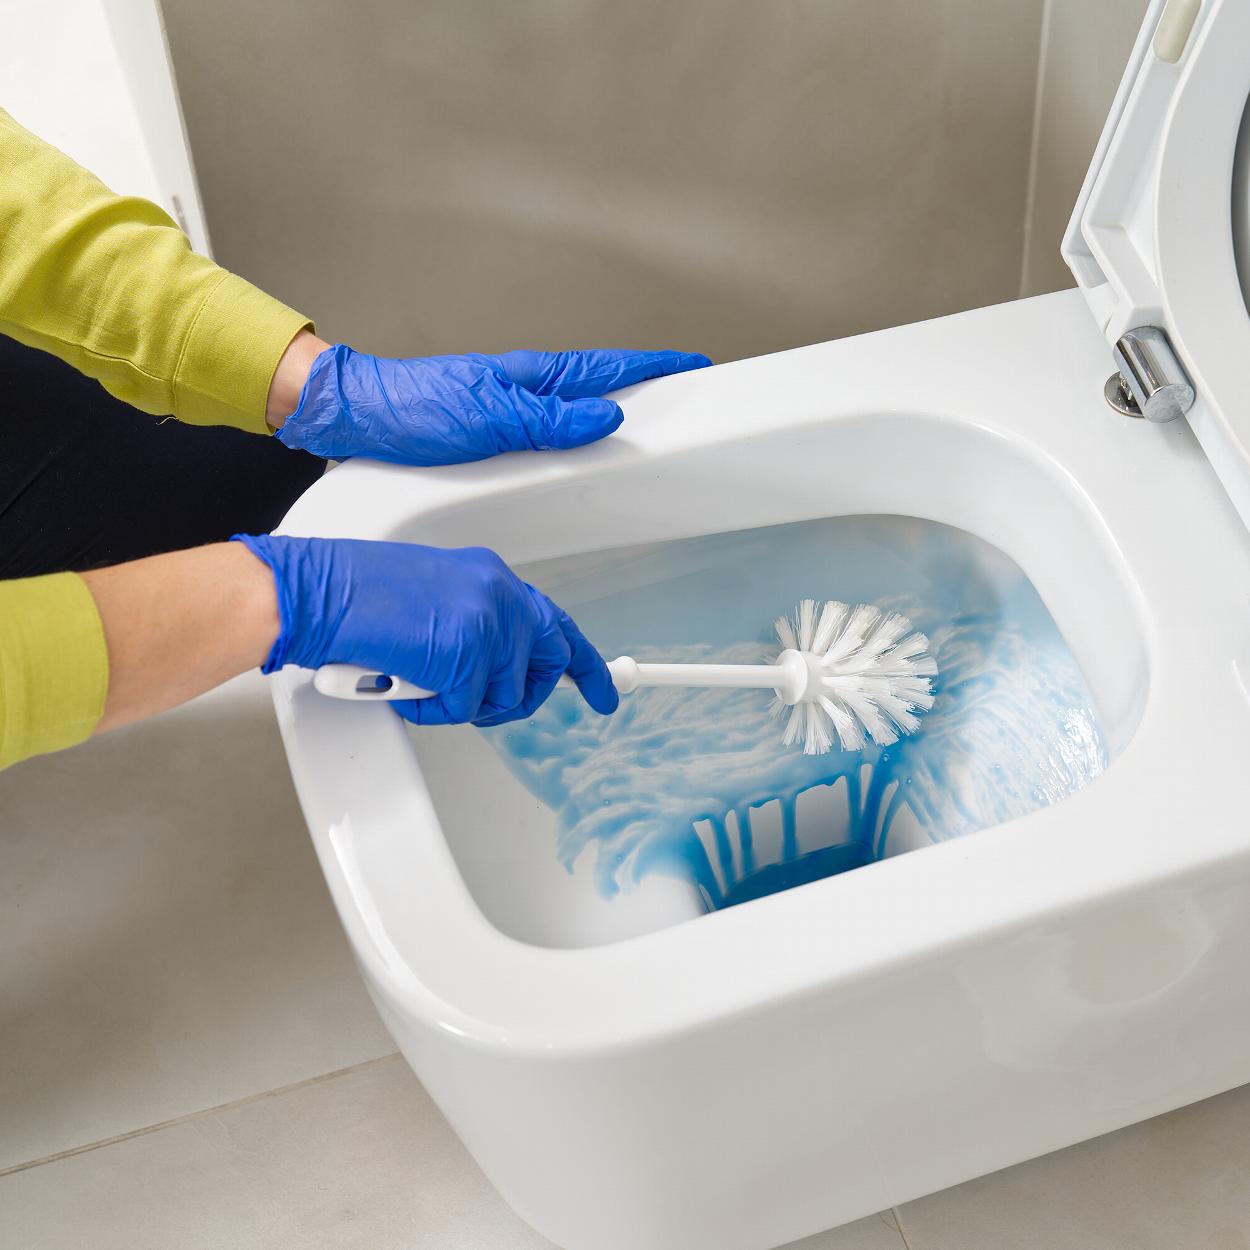 Cleaner scrubbing toilet bowl